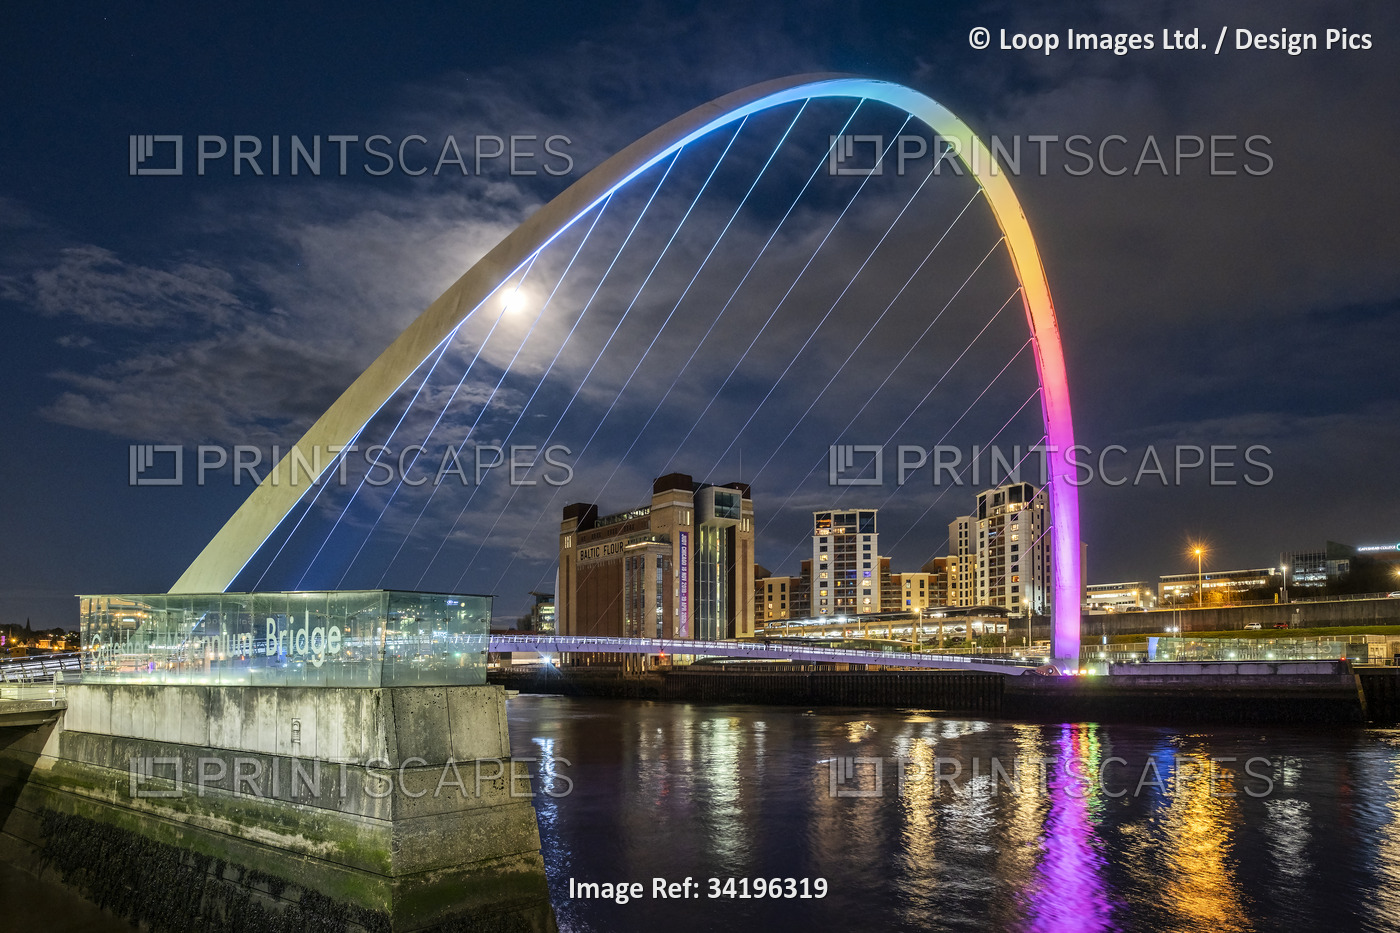 The Gateshead Millennium Bridge over the River Tyne at night.